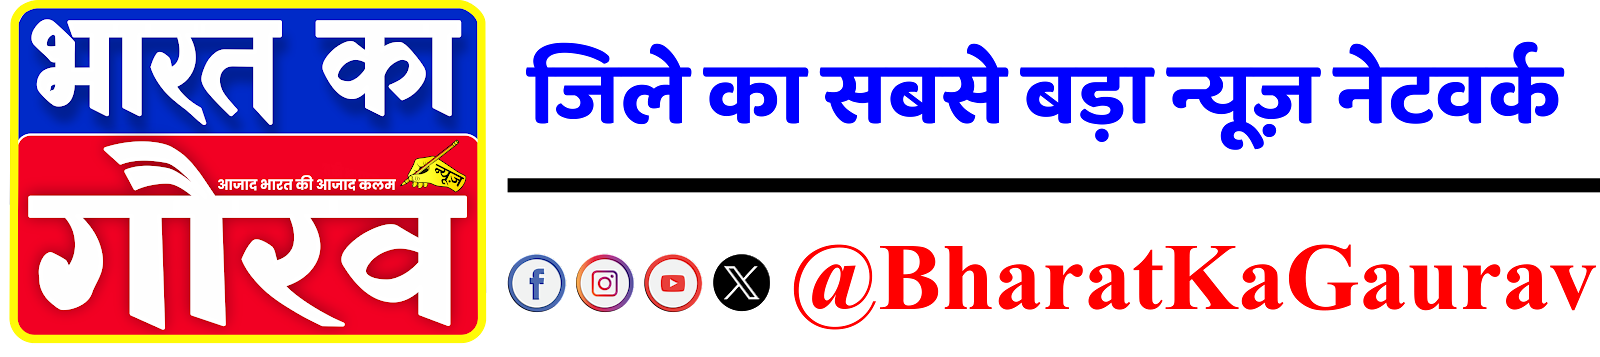 Bharat Ka Gaurav - Latest News in Hindi